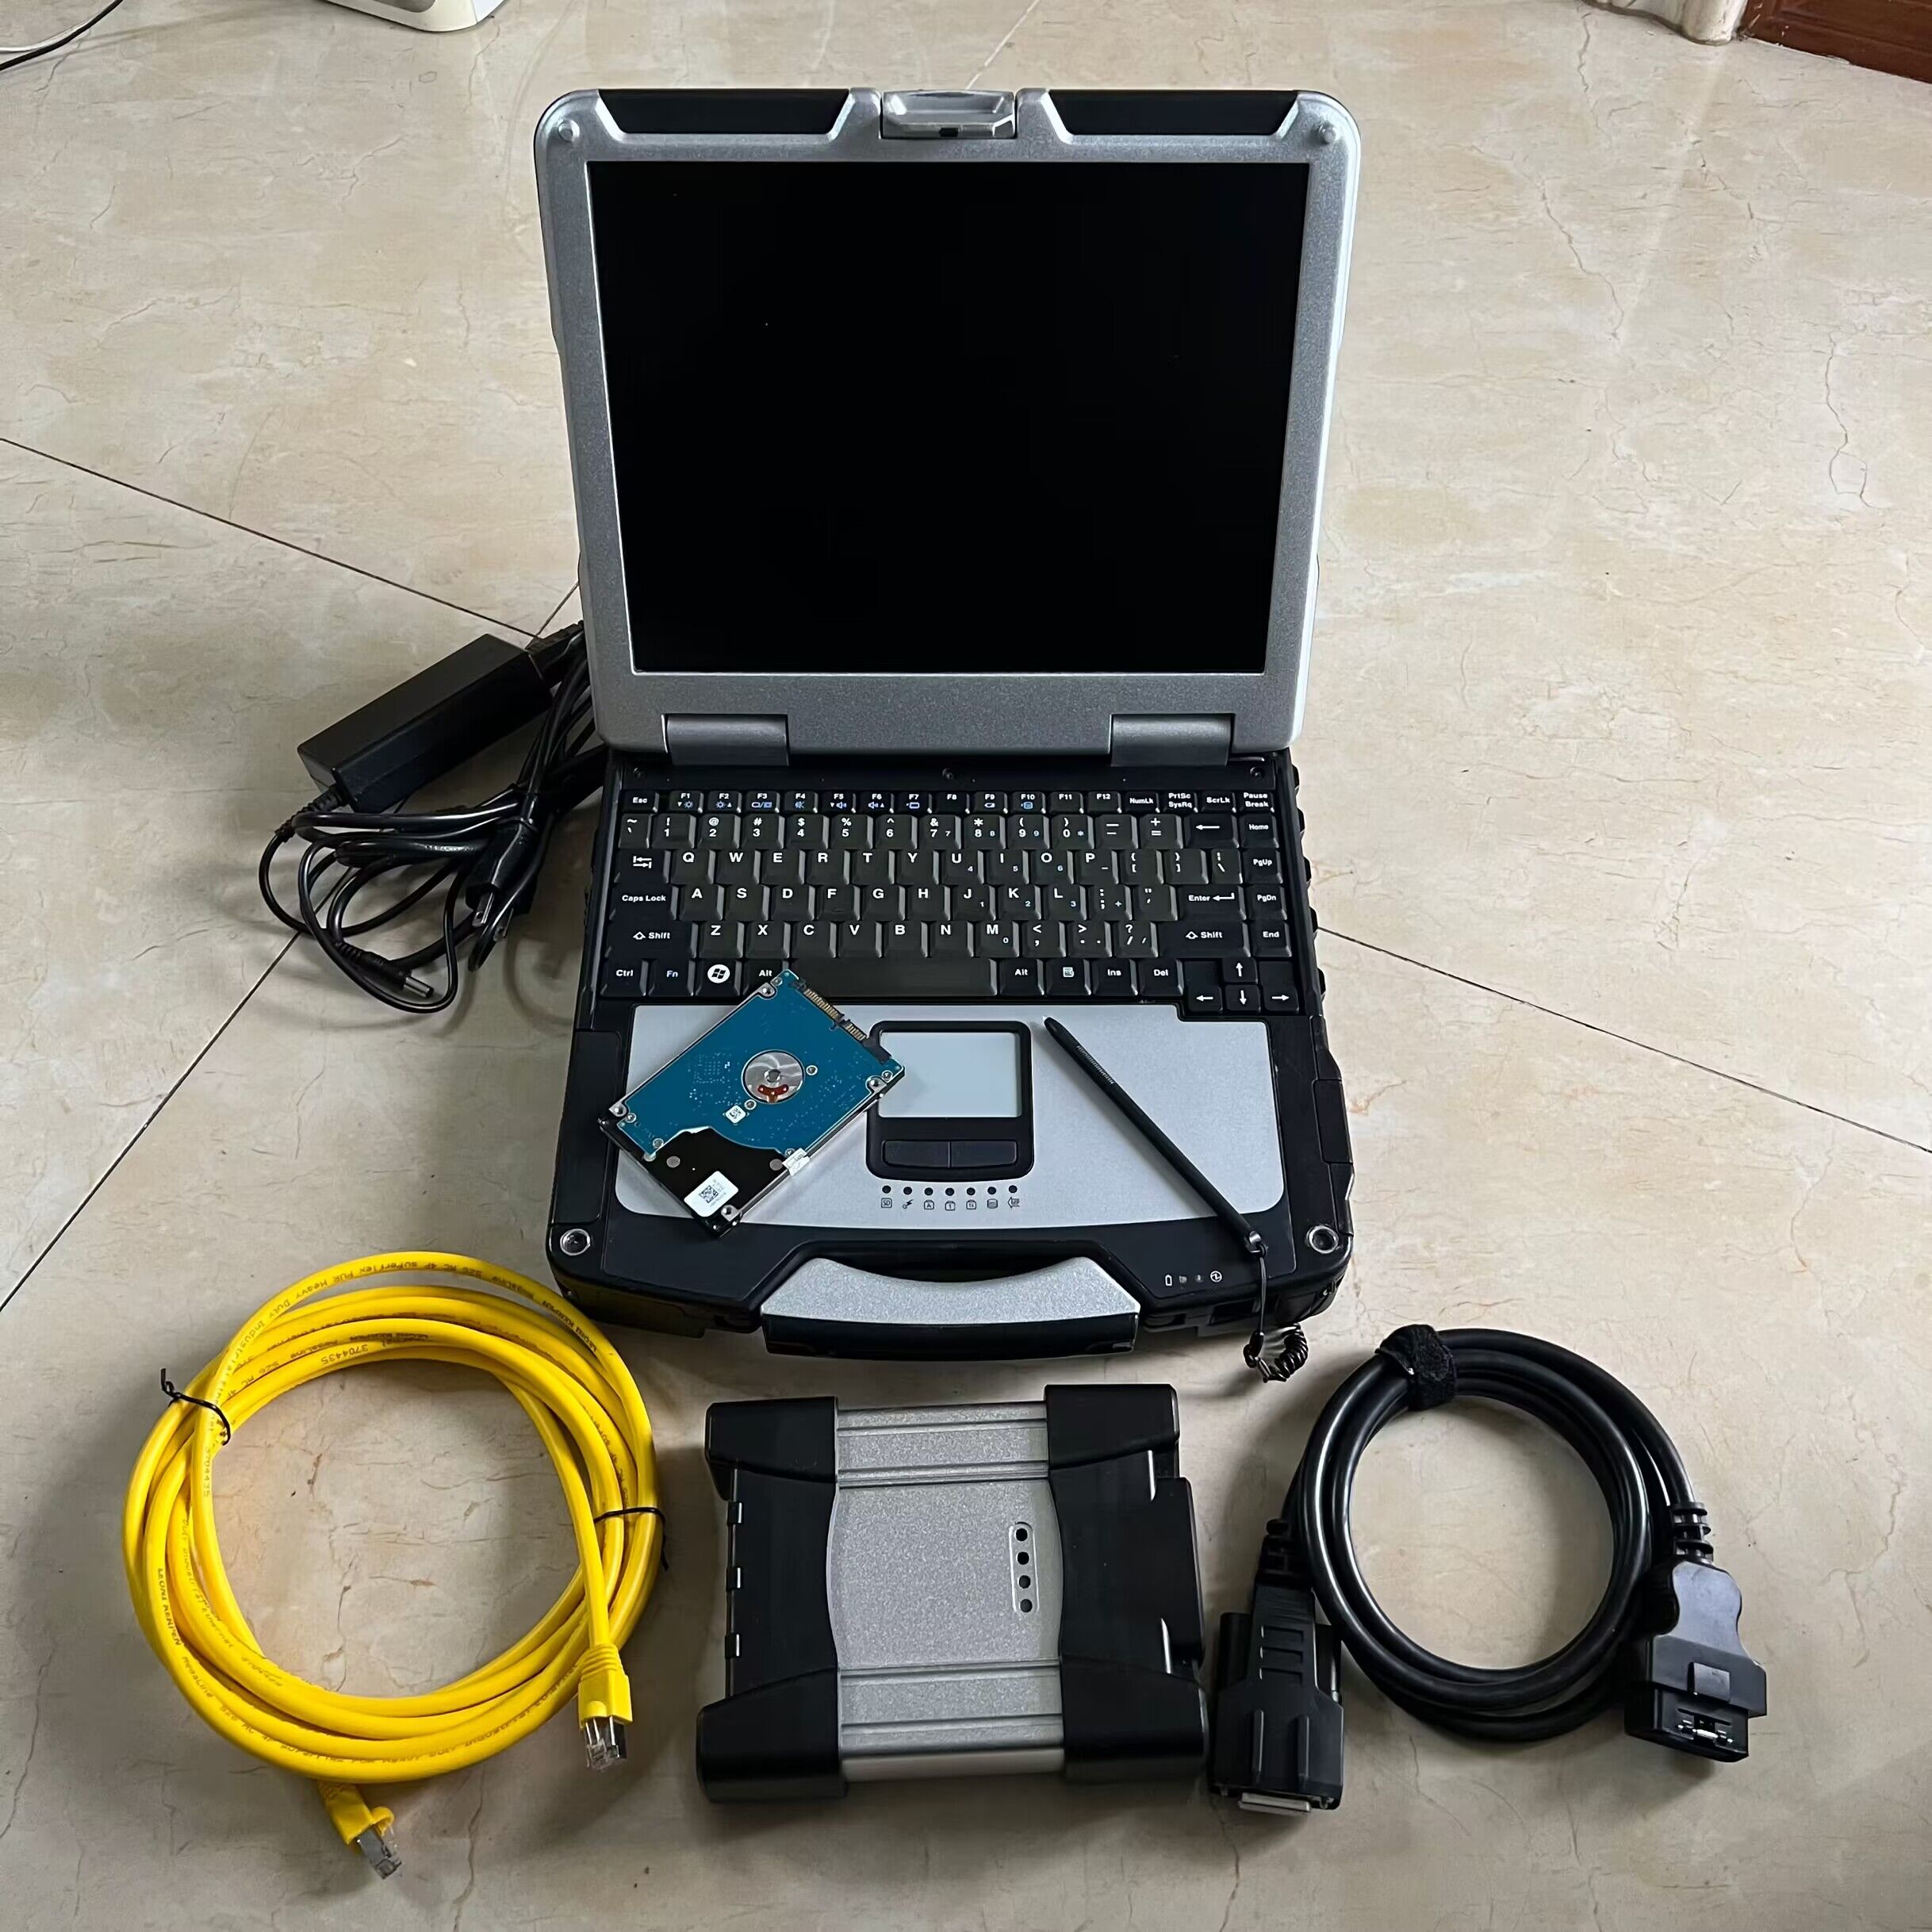 Voor BMW ICOM Volgende A3 OBD-versie Diagnostische scanner-testers plus laptop CF-31 i5 4G Touch Screen Toughbook Ready gebruik